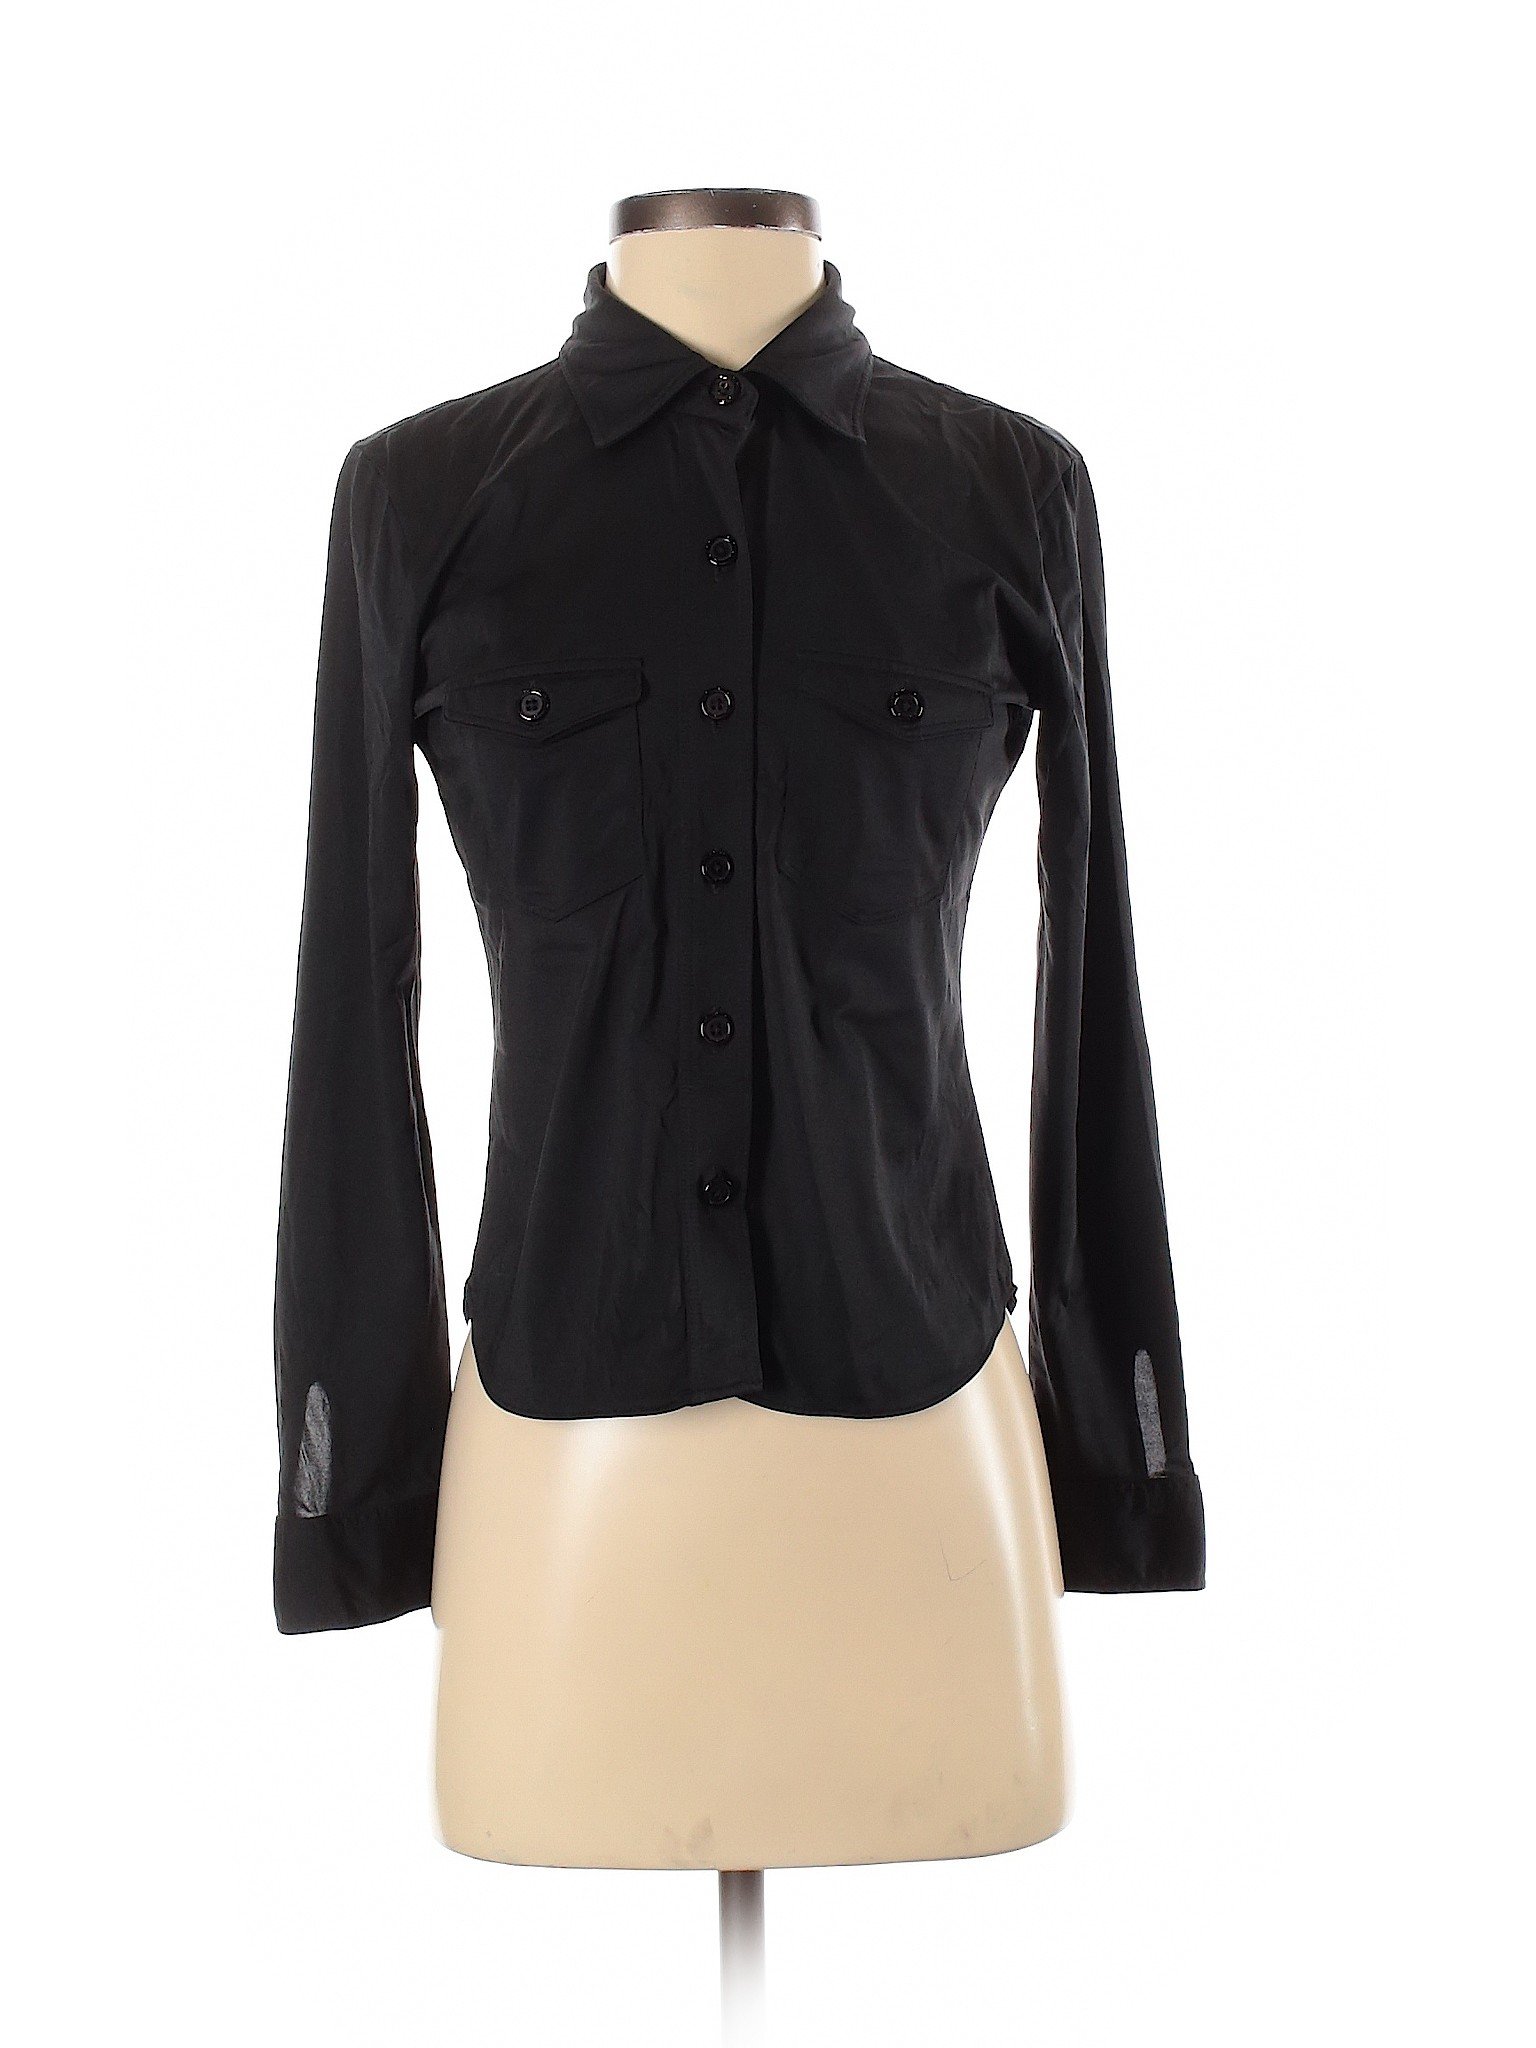 Gap Women Black Long Sleeve Button-Down Shirt S | eBay